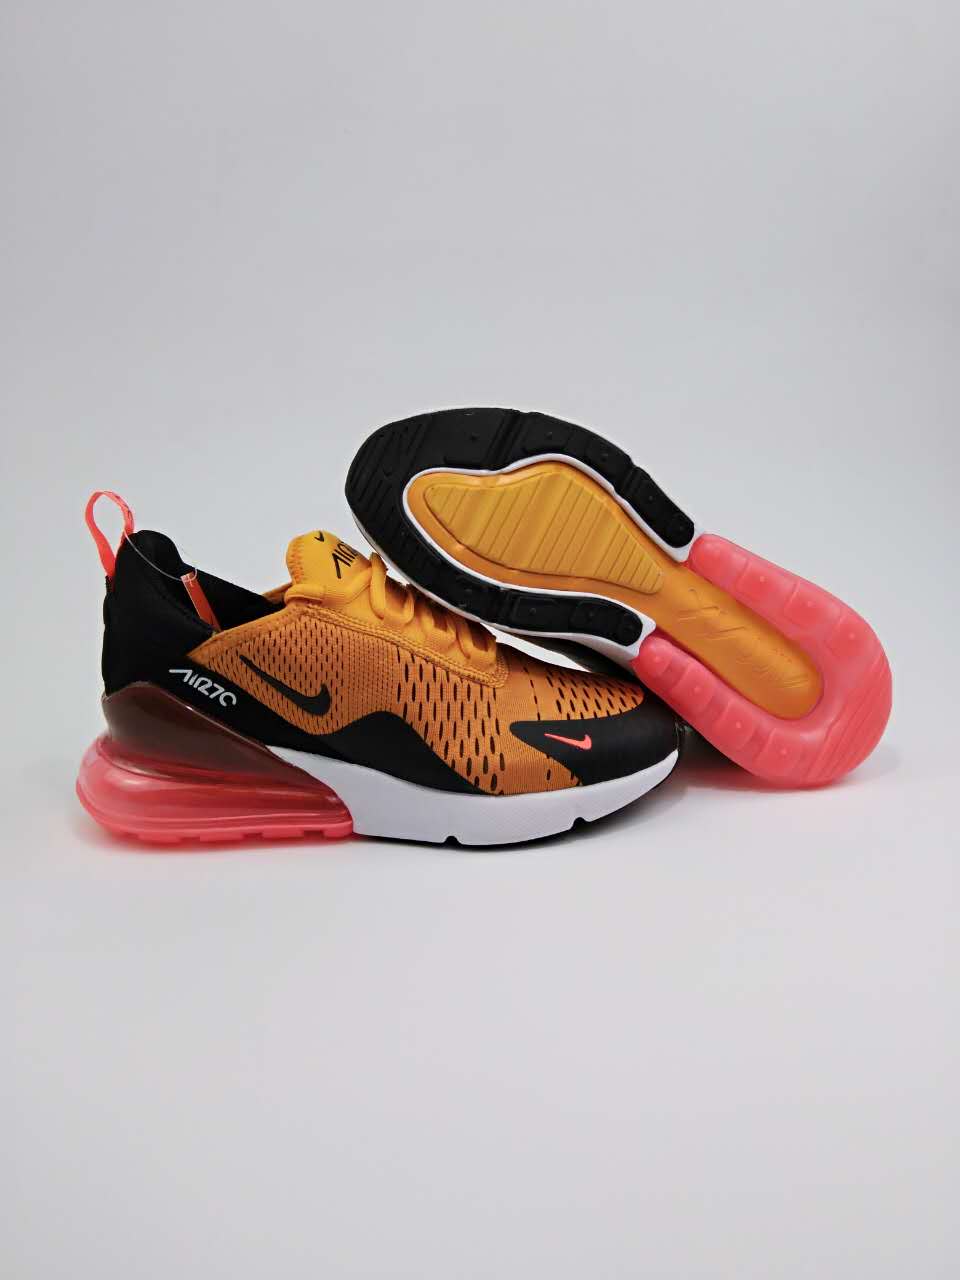 New Nike Air Max Flair 270 Nano Orange Black Shoes